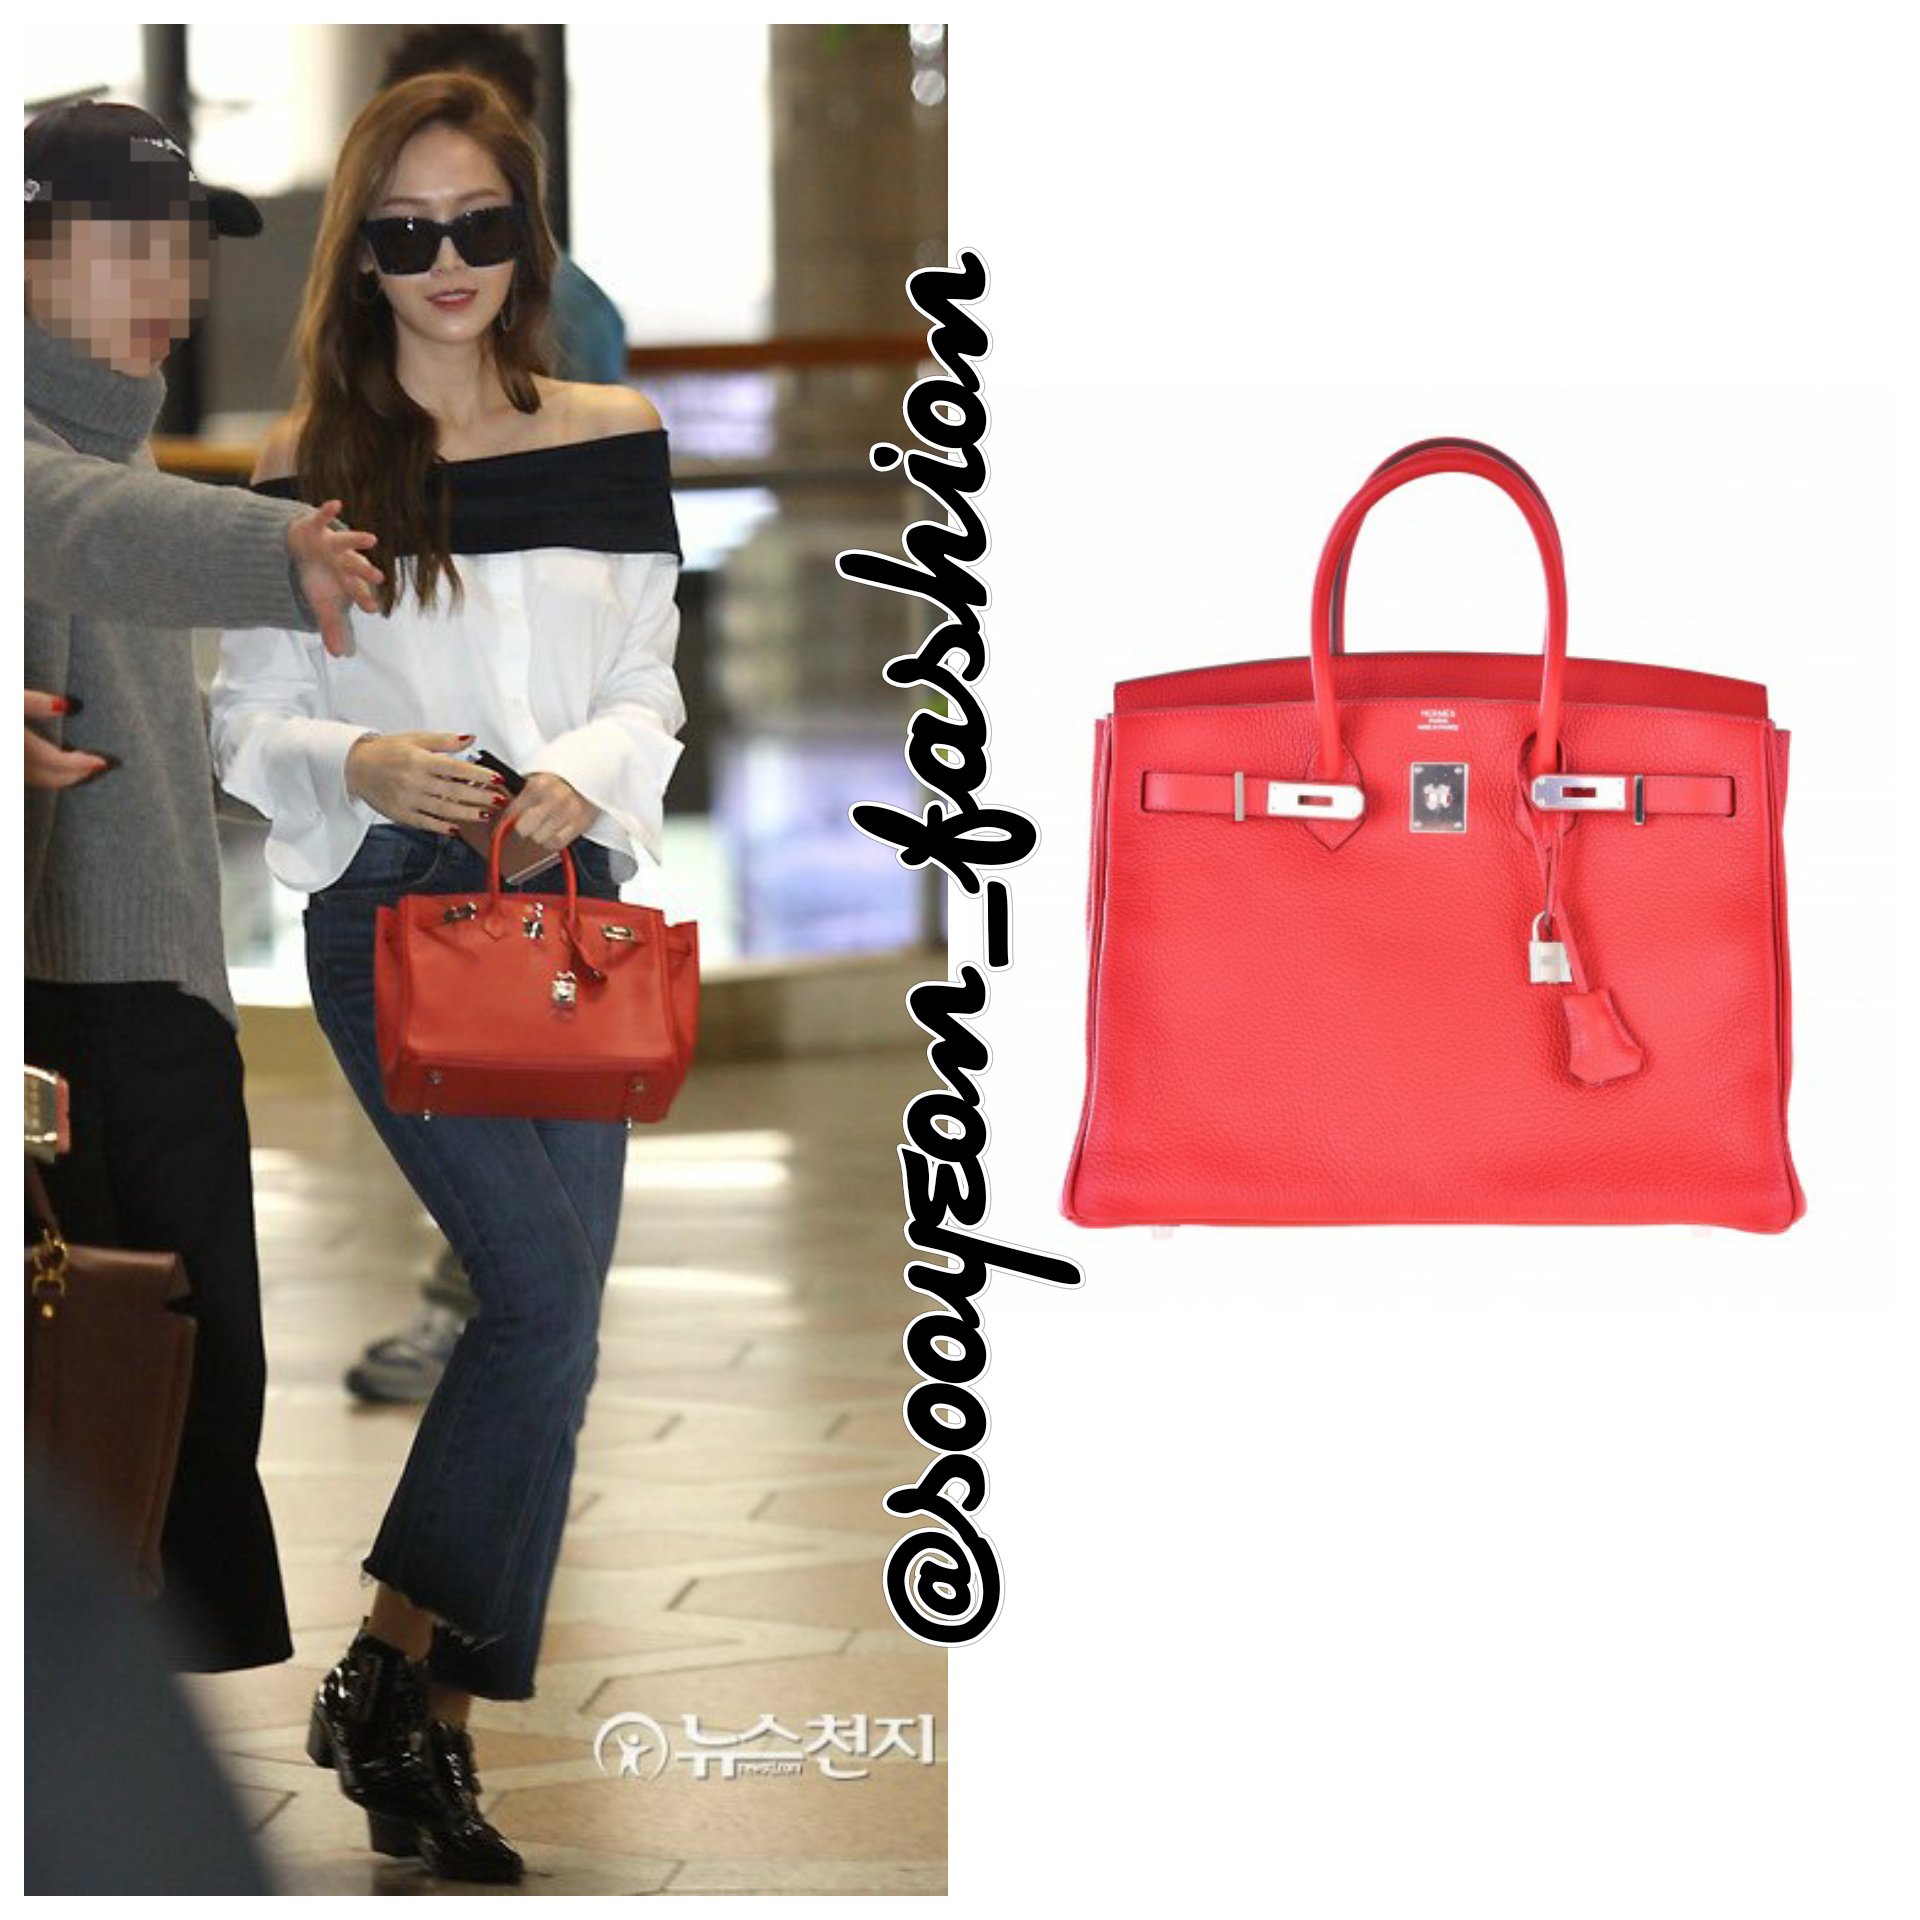 jsy fashion on X: 160410 Gimpo Airport HERMÈS: Birkin Bag 35cm (Red),  $22.200  #JessicaJung #sicasairportfashion   / X